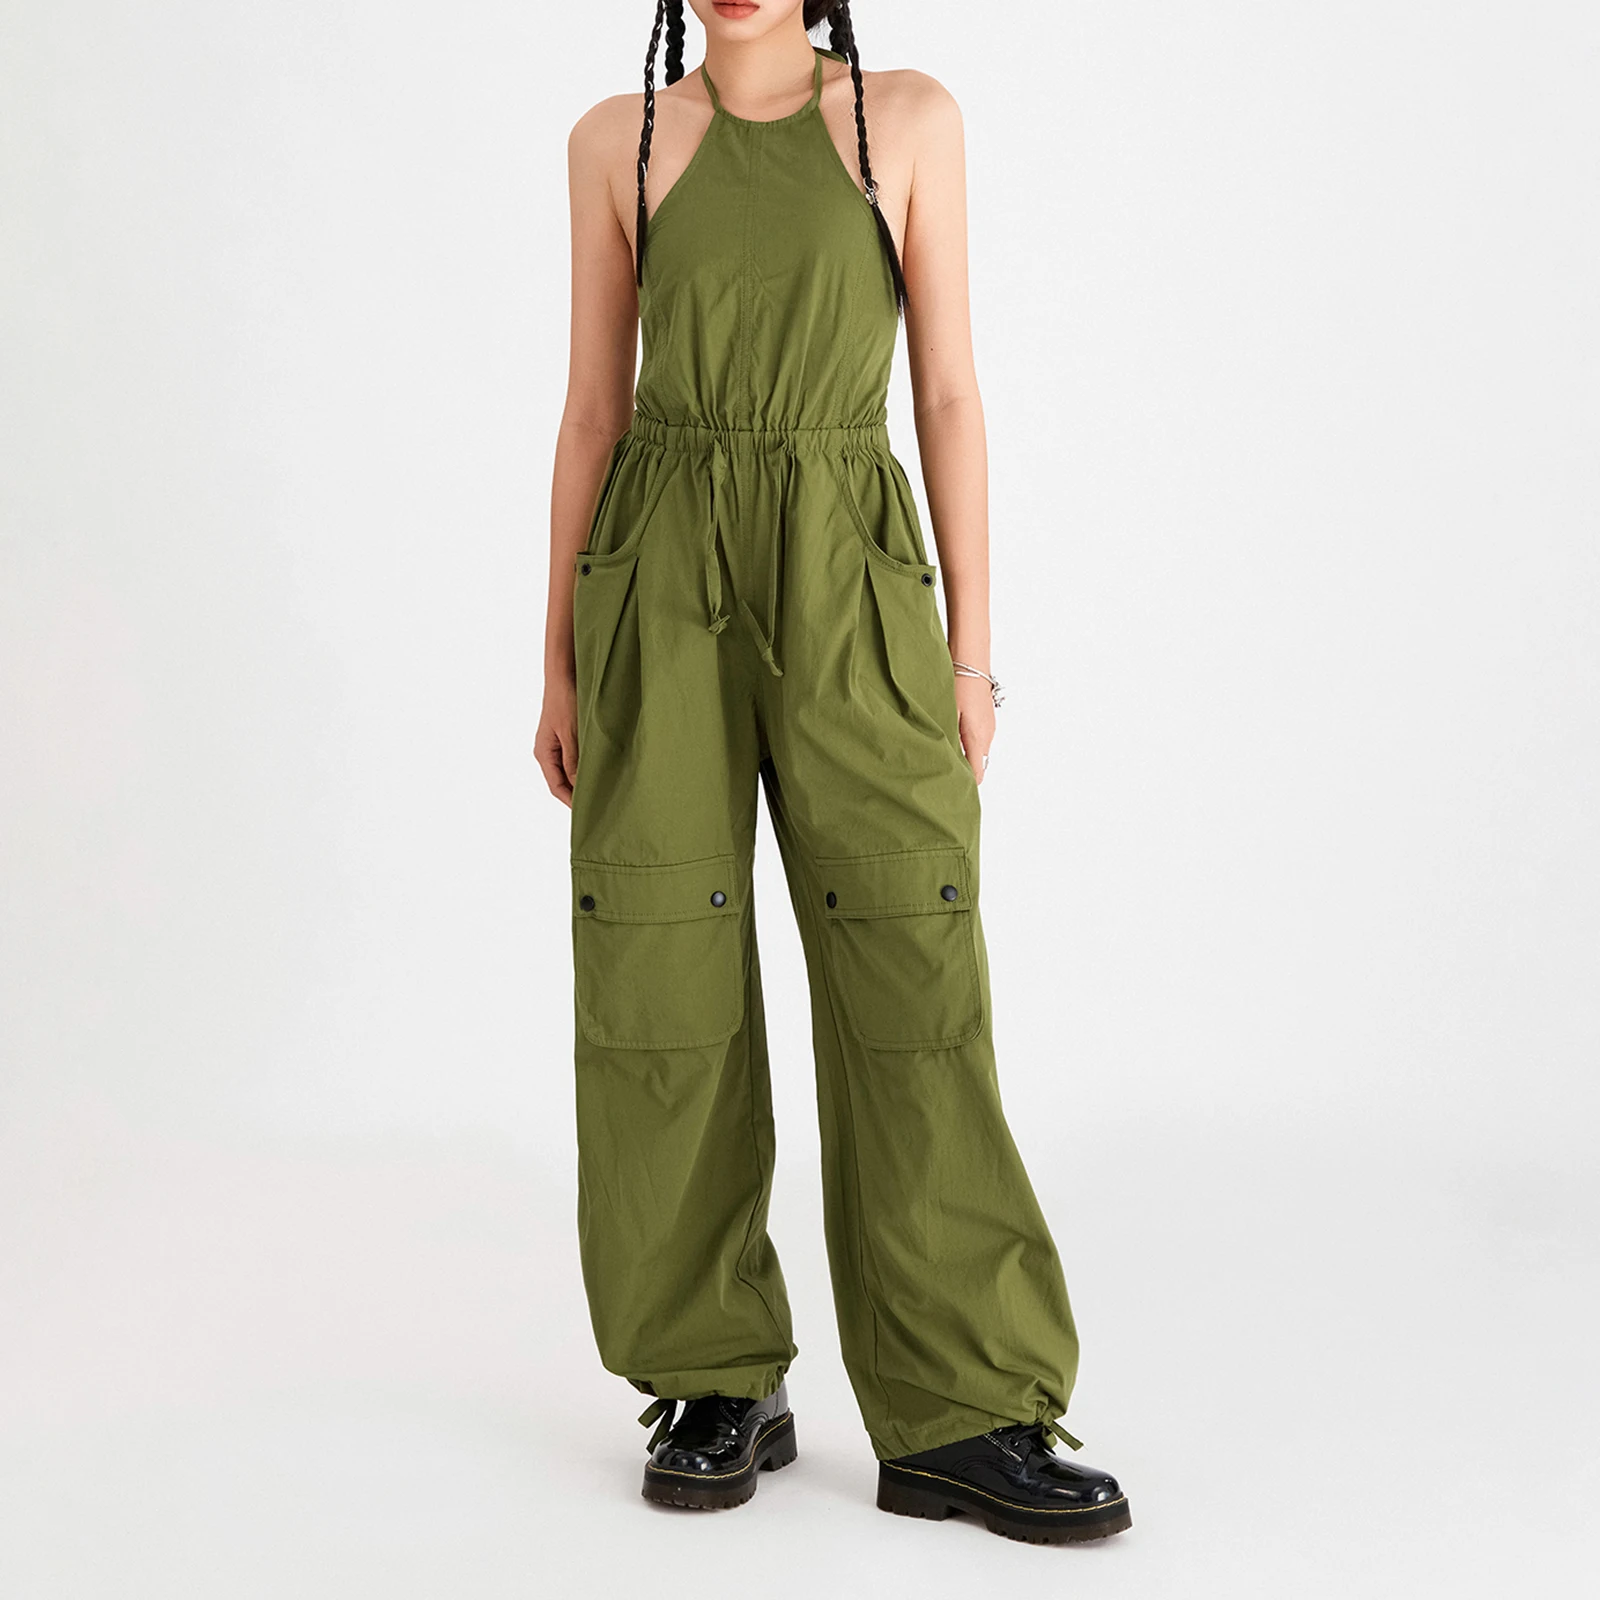 

Summer Green Jumpsuit Women Backless Bib Overalls Sleeveless Belted Long Romper Elegant V Neck Playsuit High Waist Pants Overall